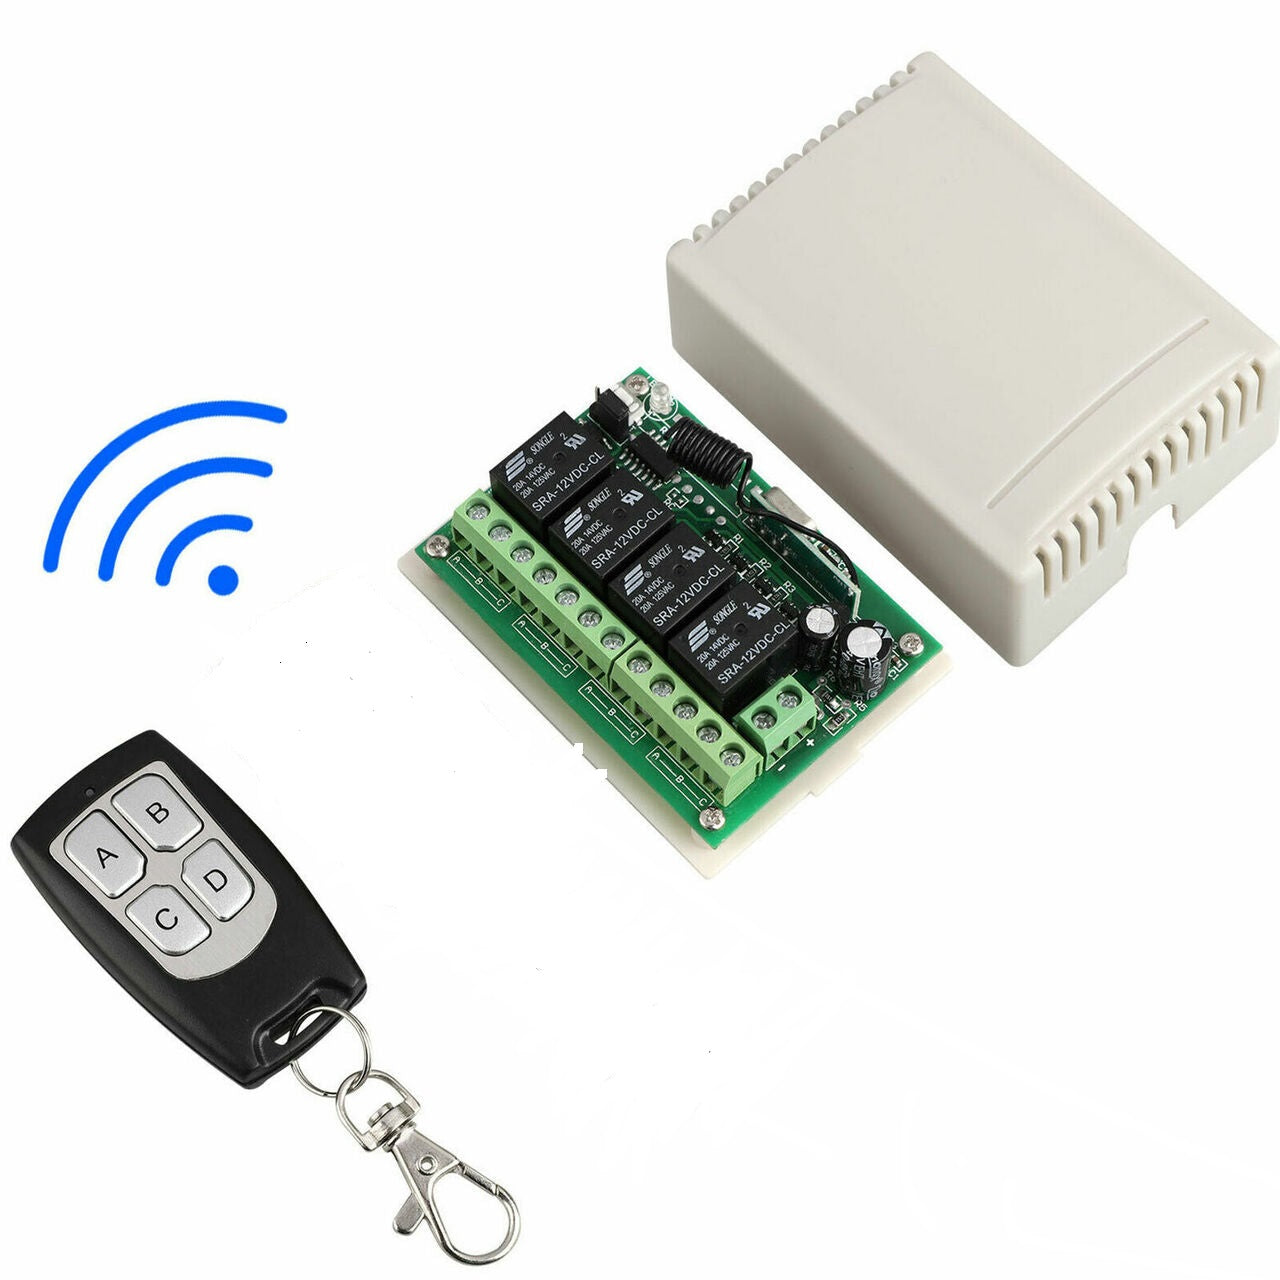 DC 12V 1000M 6-Channel Wireless Remote Control Switch White Blue